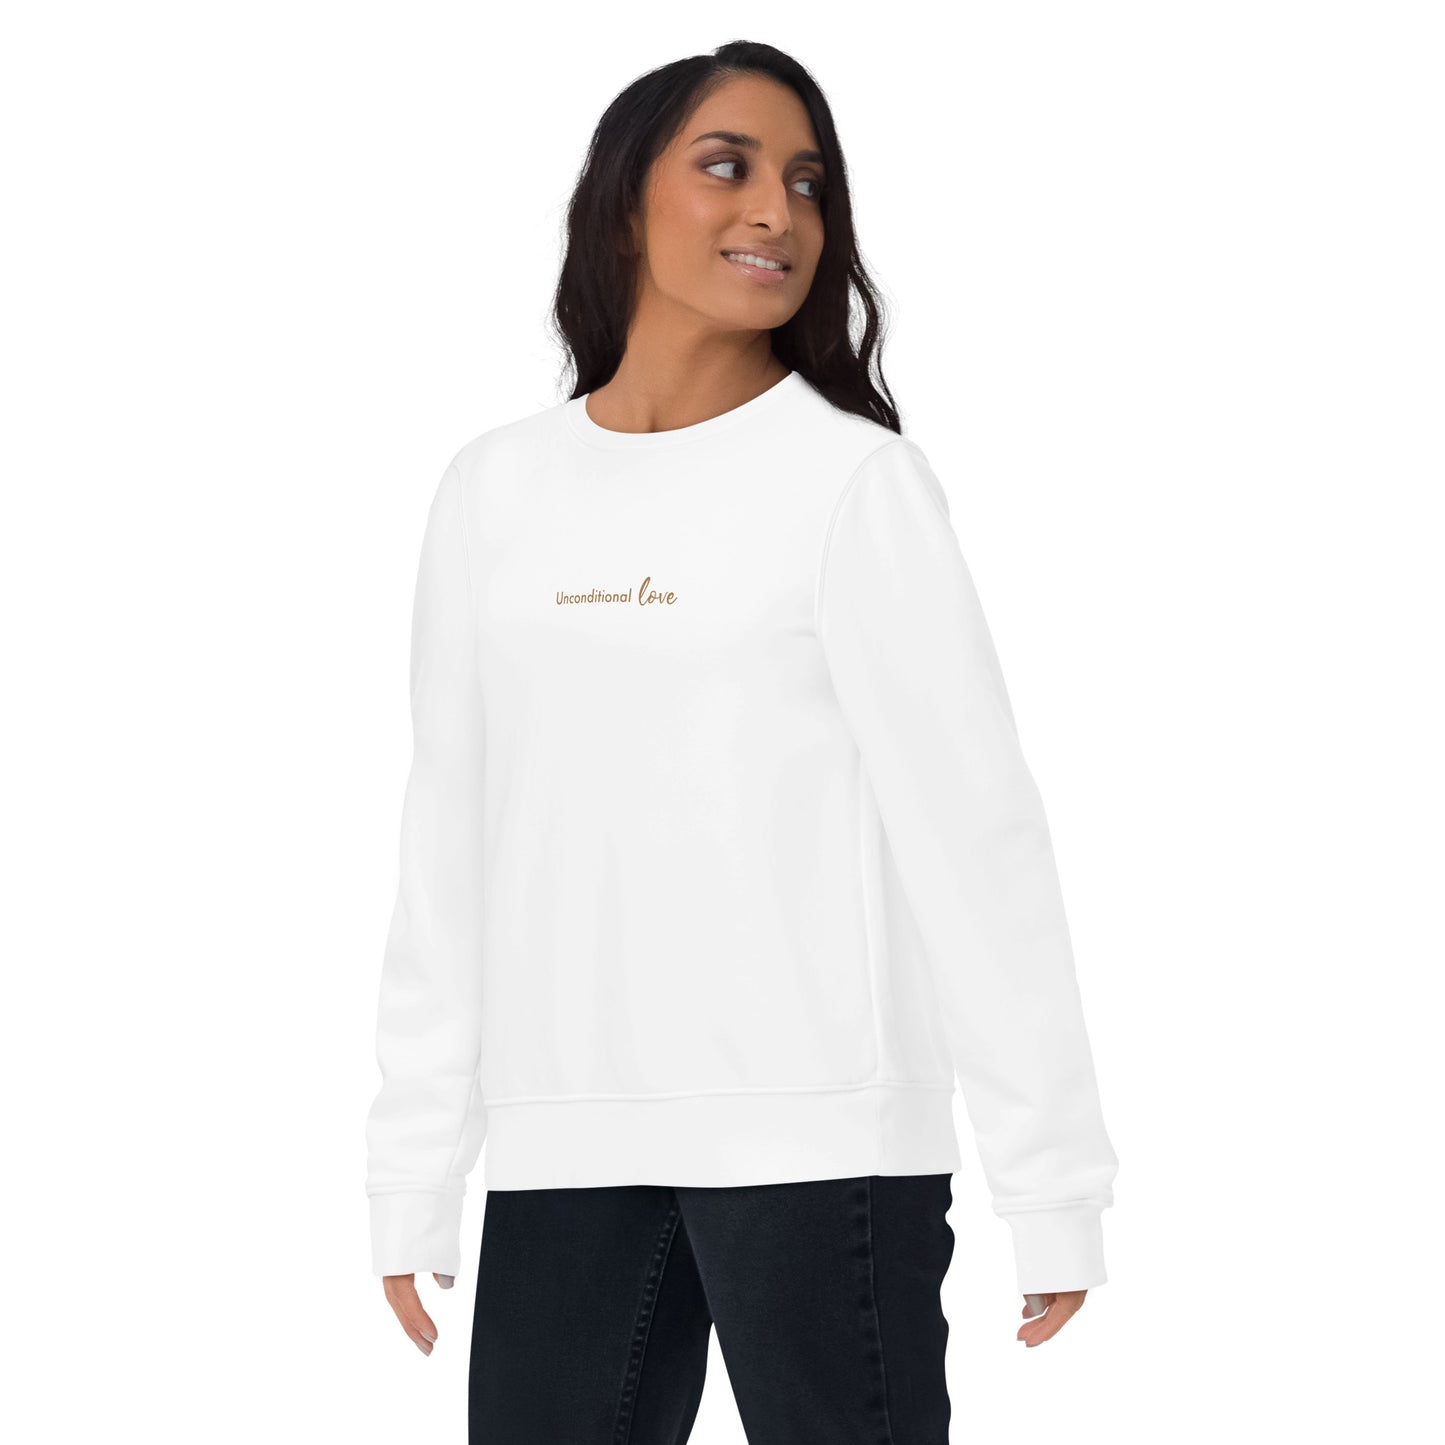 Unconditional Love Women's Oversized Organic Cotton Sweatshirt